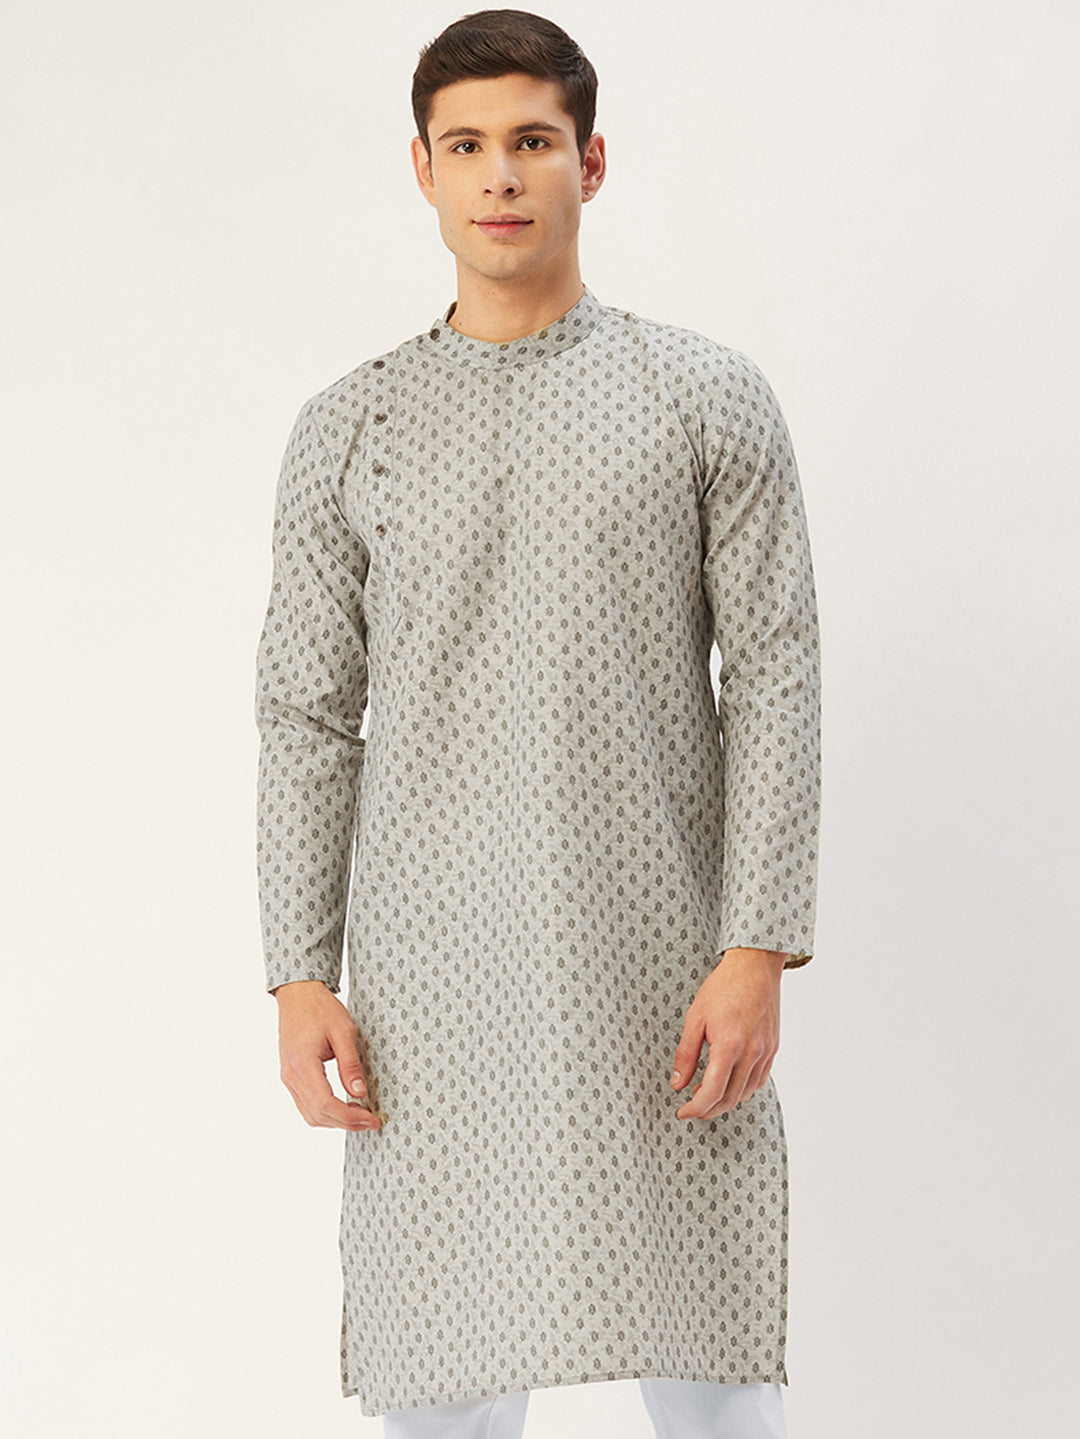 Jompers Men's Grey Cotton printed kurta Only